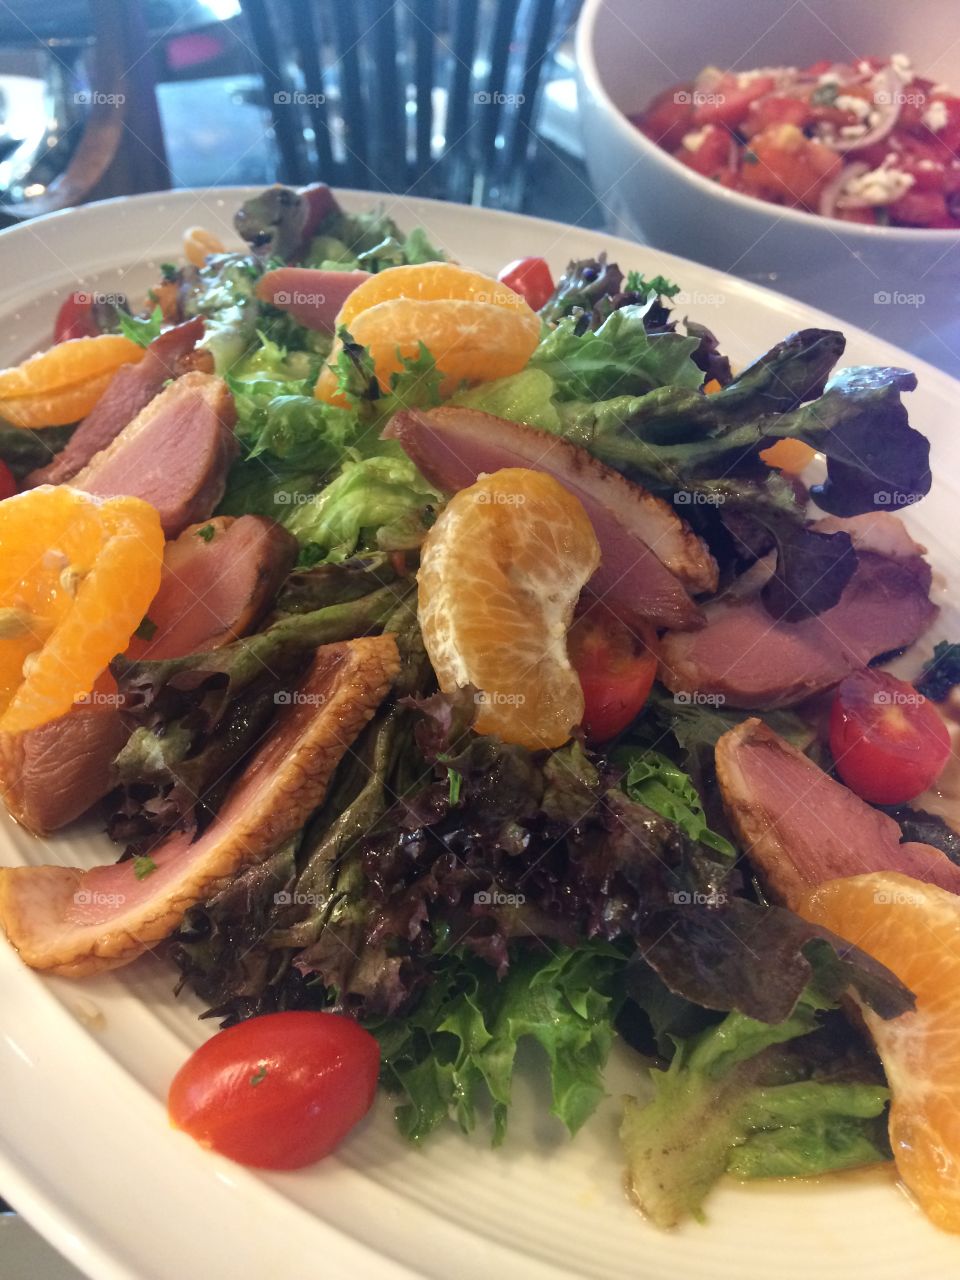 #salad #dilicious #meeting #yummy #healthy #smokeduck #fresh #mix #food